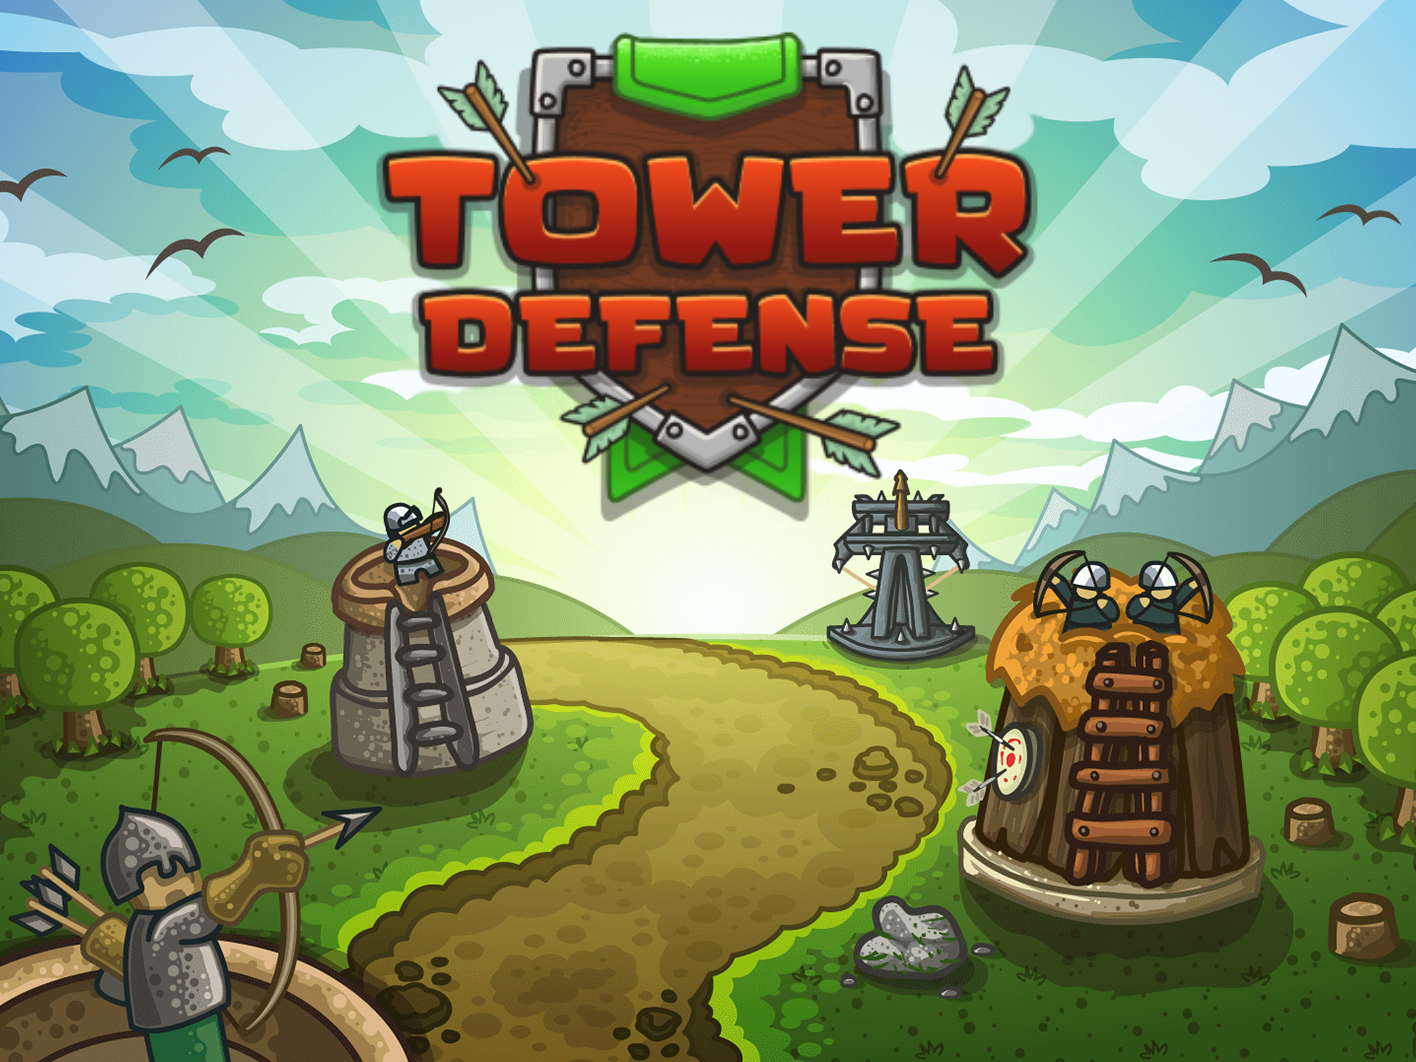 Игры защита нападение. Tower Defense башни. Игра Tower Defense 1. Tower Defense башенки. Оборона башни / Tower Defense.